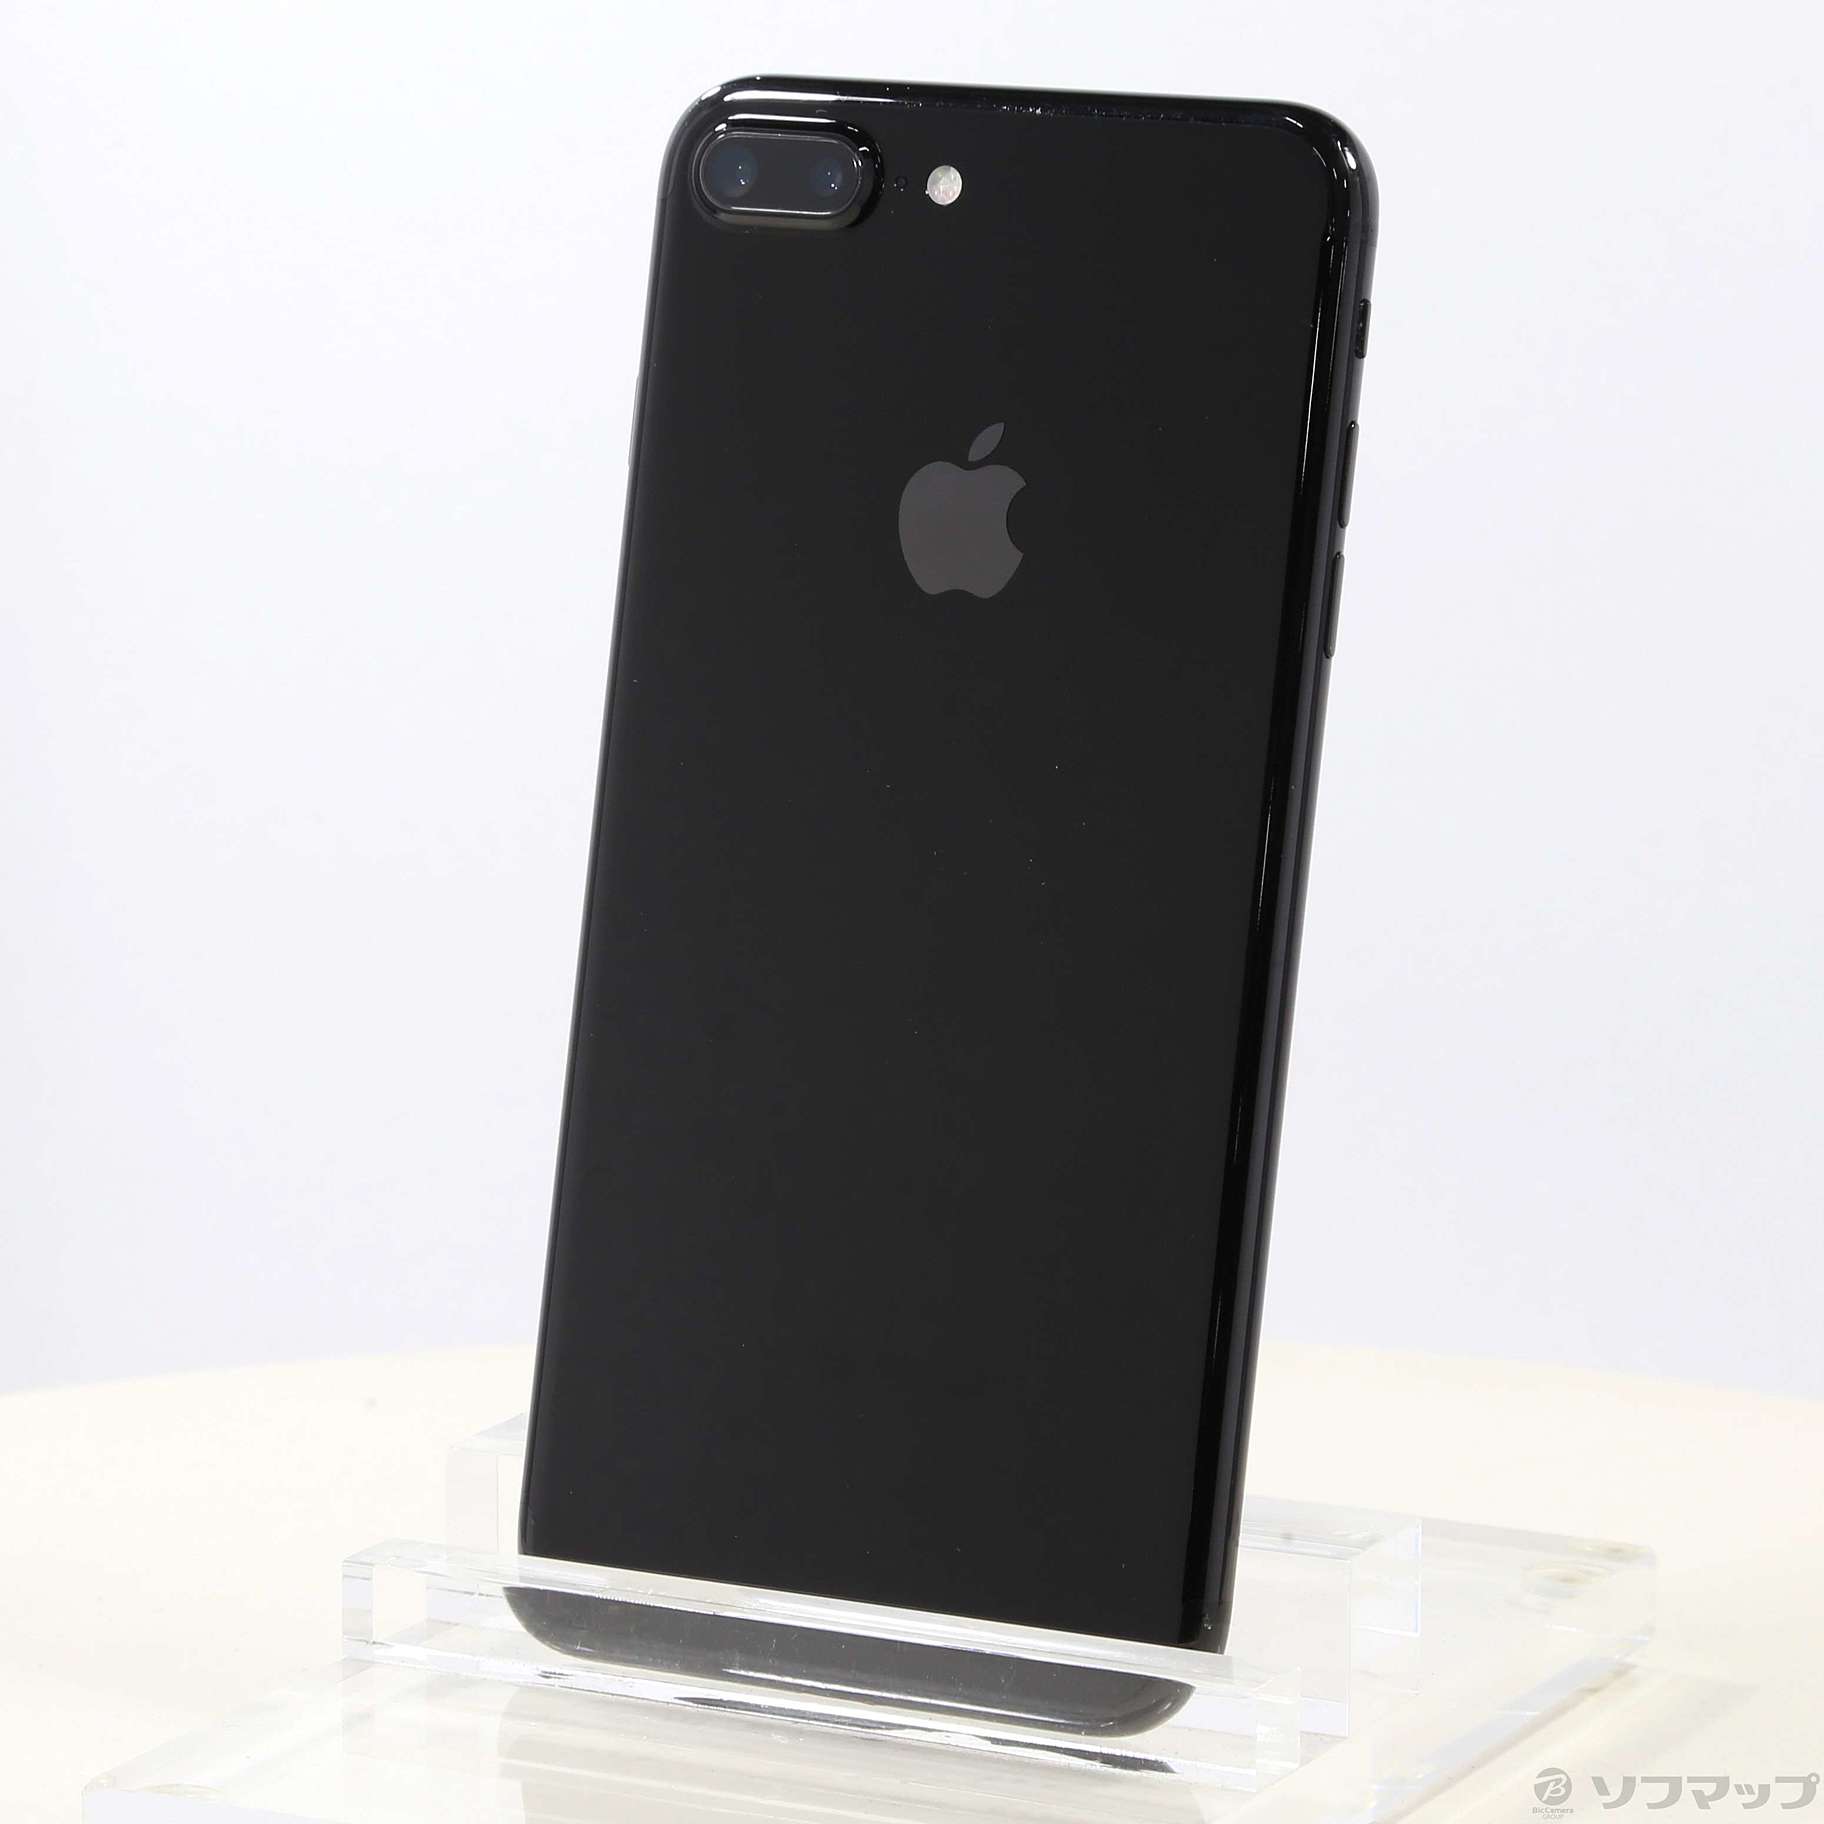 iPhone 7 Plus Jet Black 256 GB SIMフリー